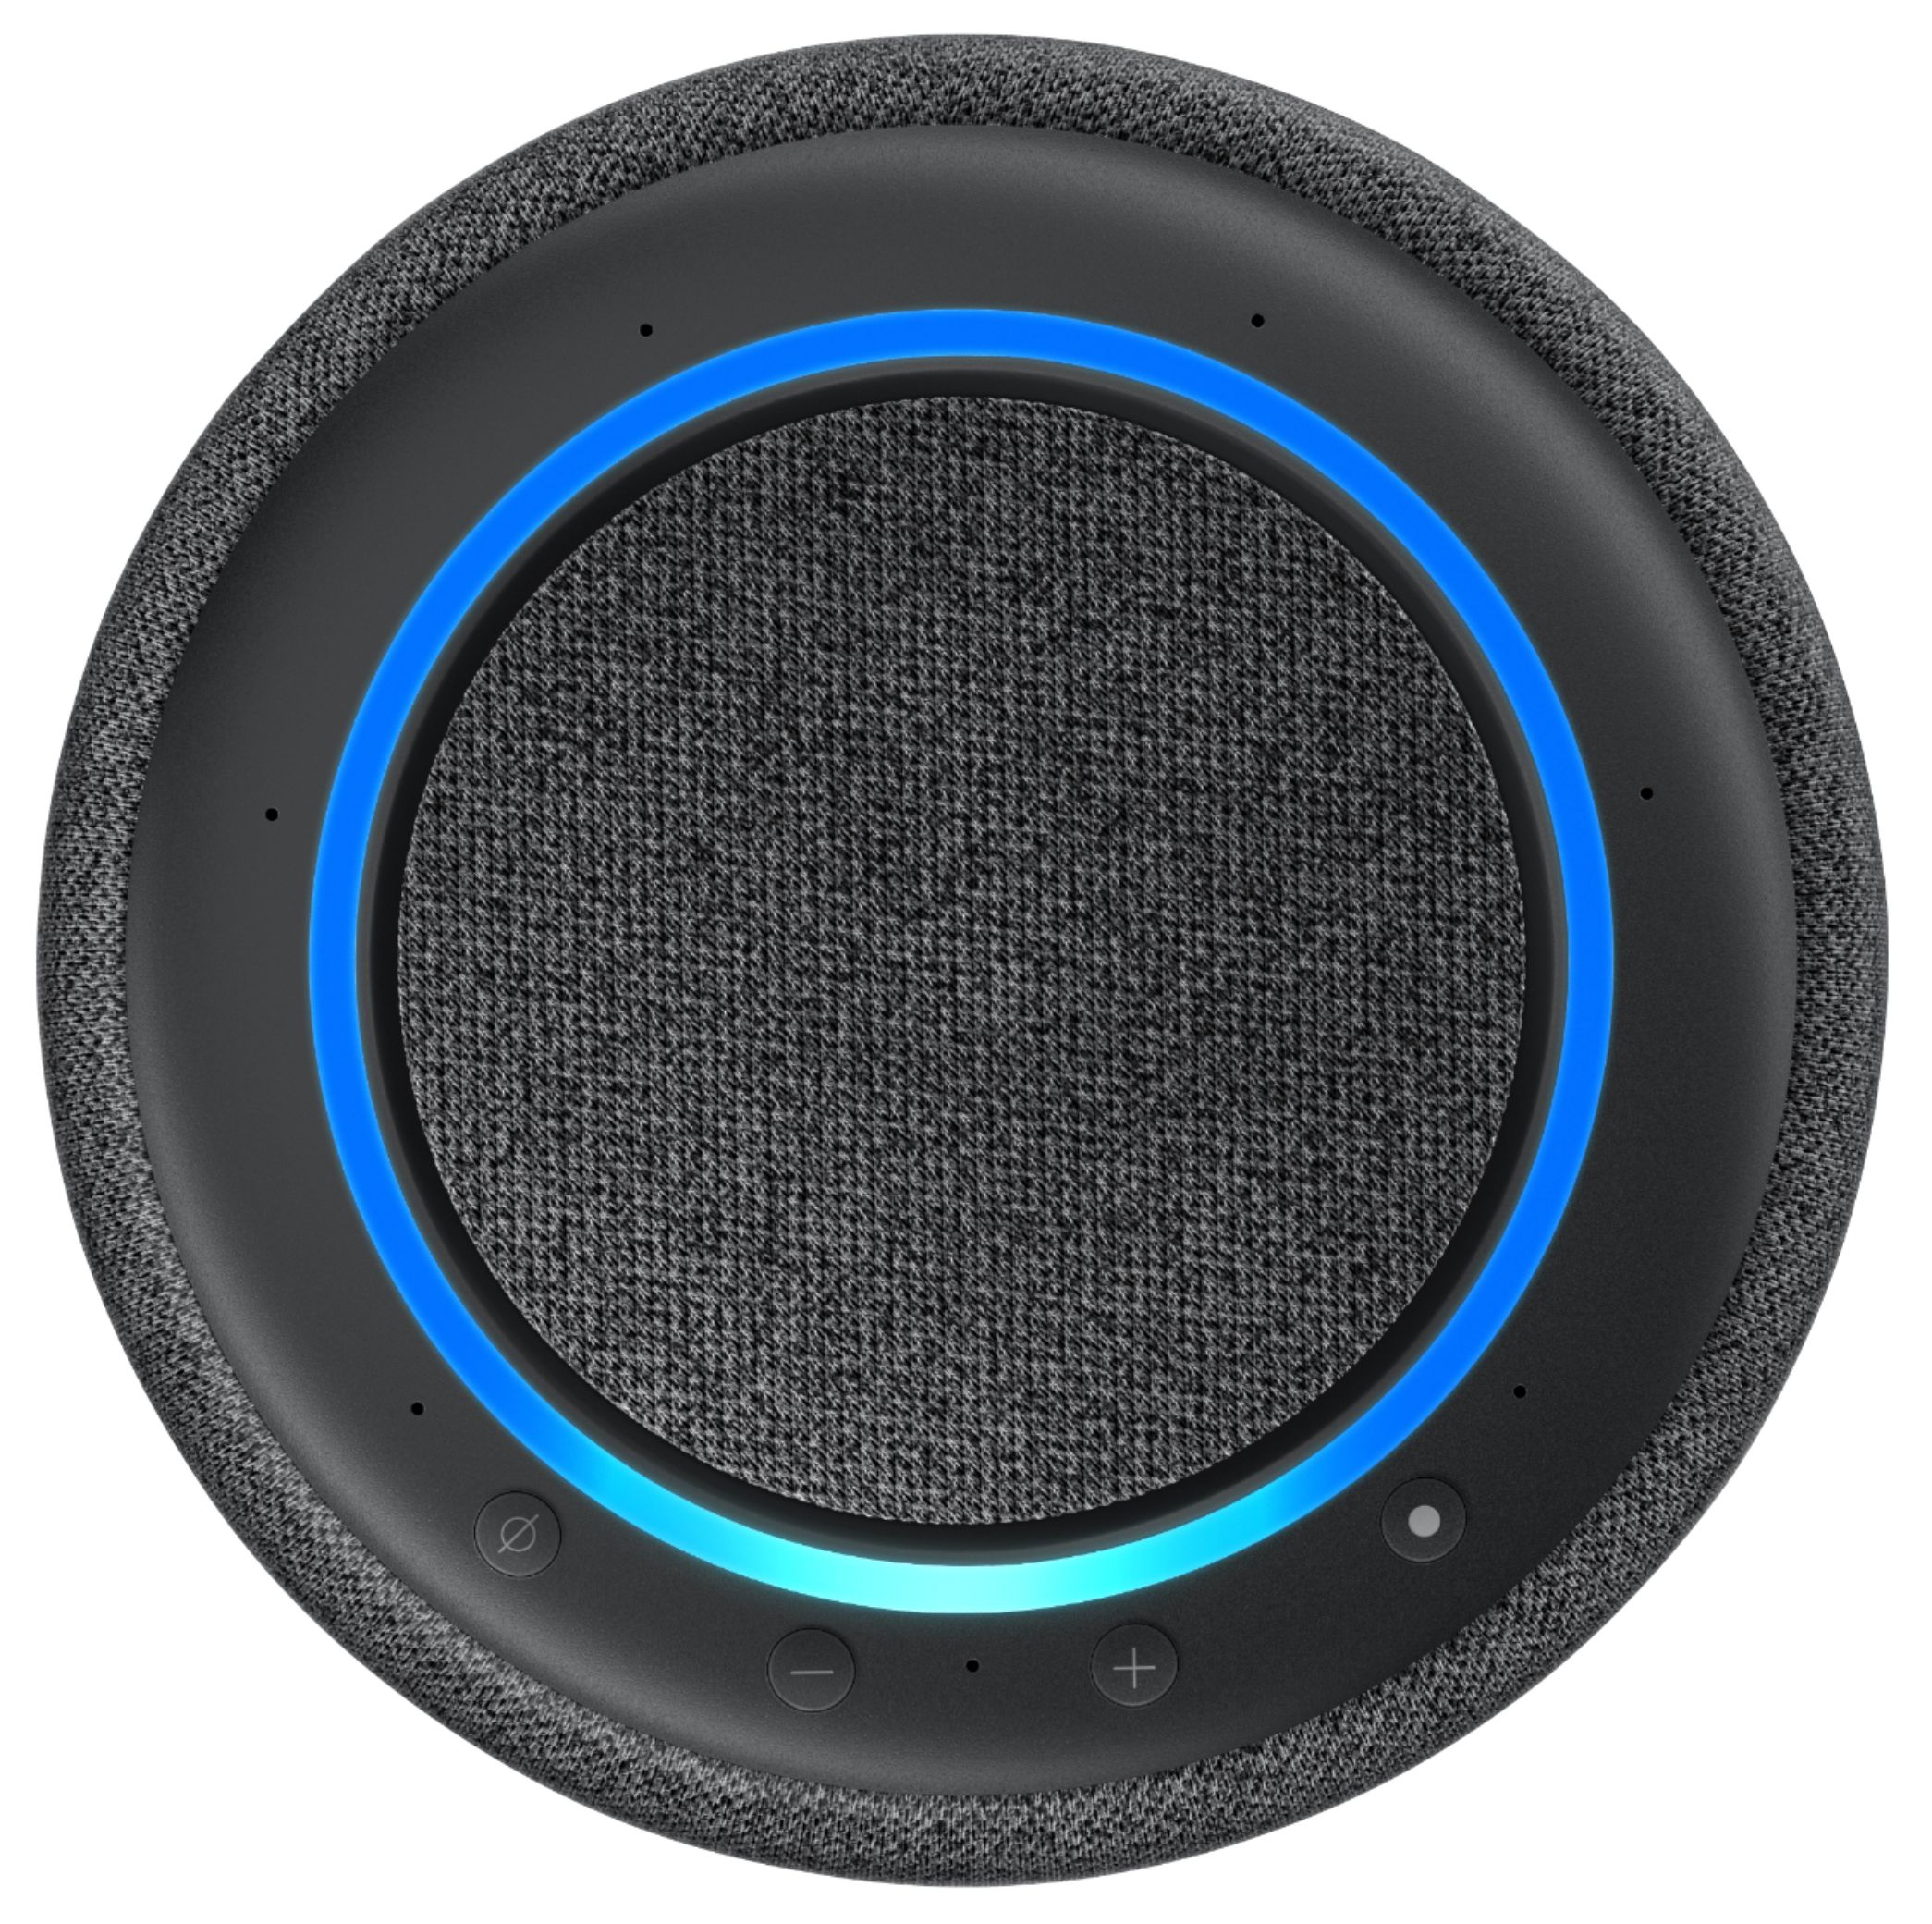 title Joint Seminar Amazon Echo Studio Smart Speaker with Alexa Charcoal B07G9Y3ZMC - Best Buy